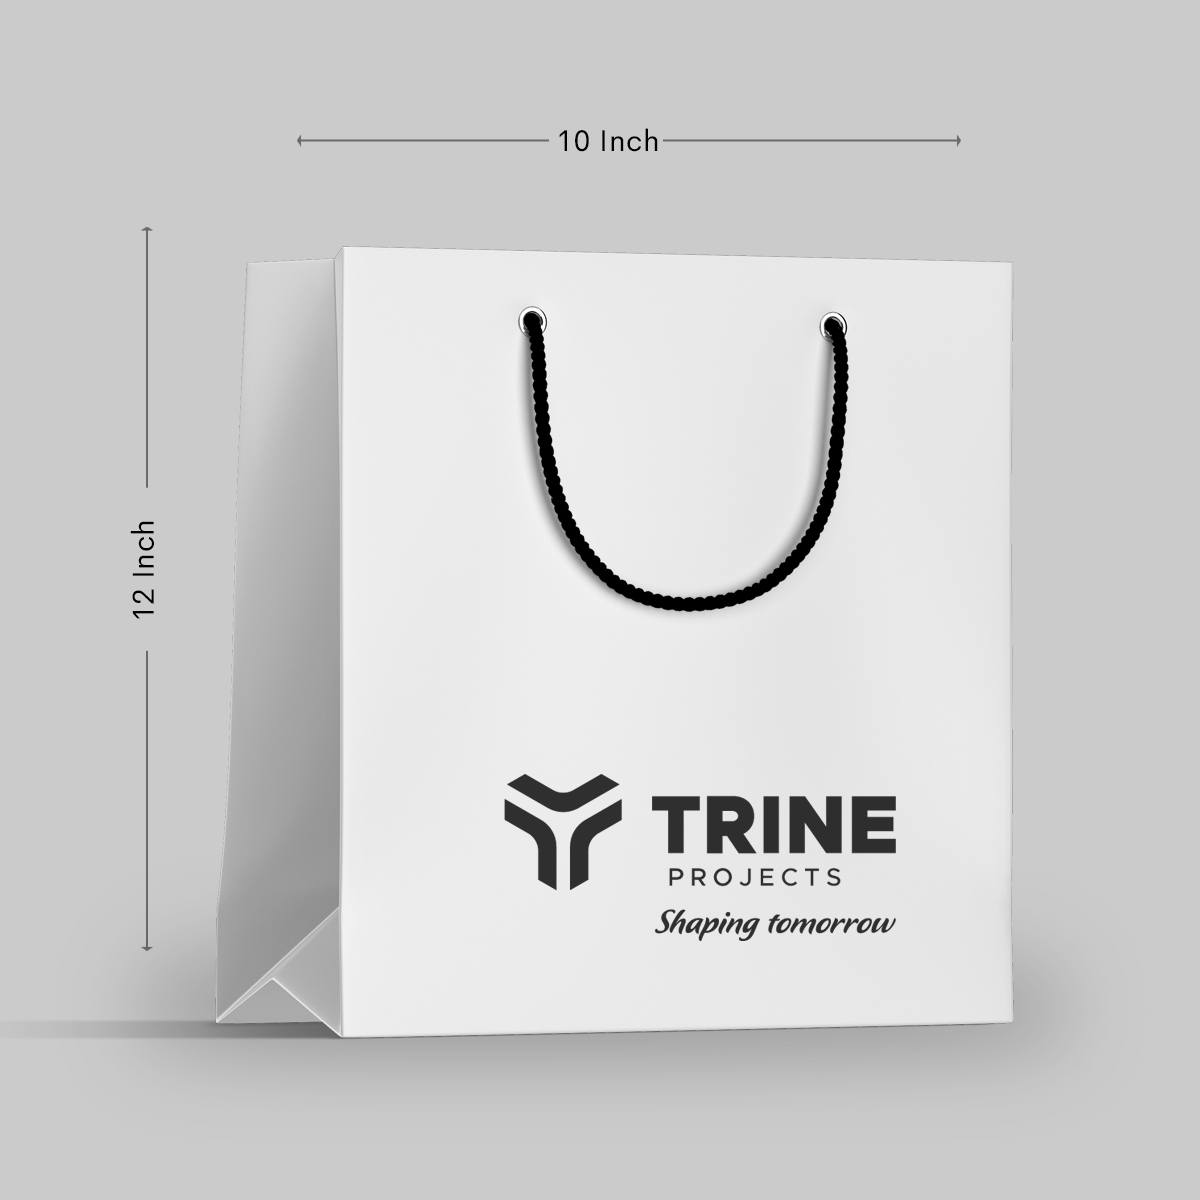 Paper Shopping Bag Design Graphic by Ju Design · Creative Fabrica